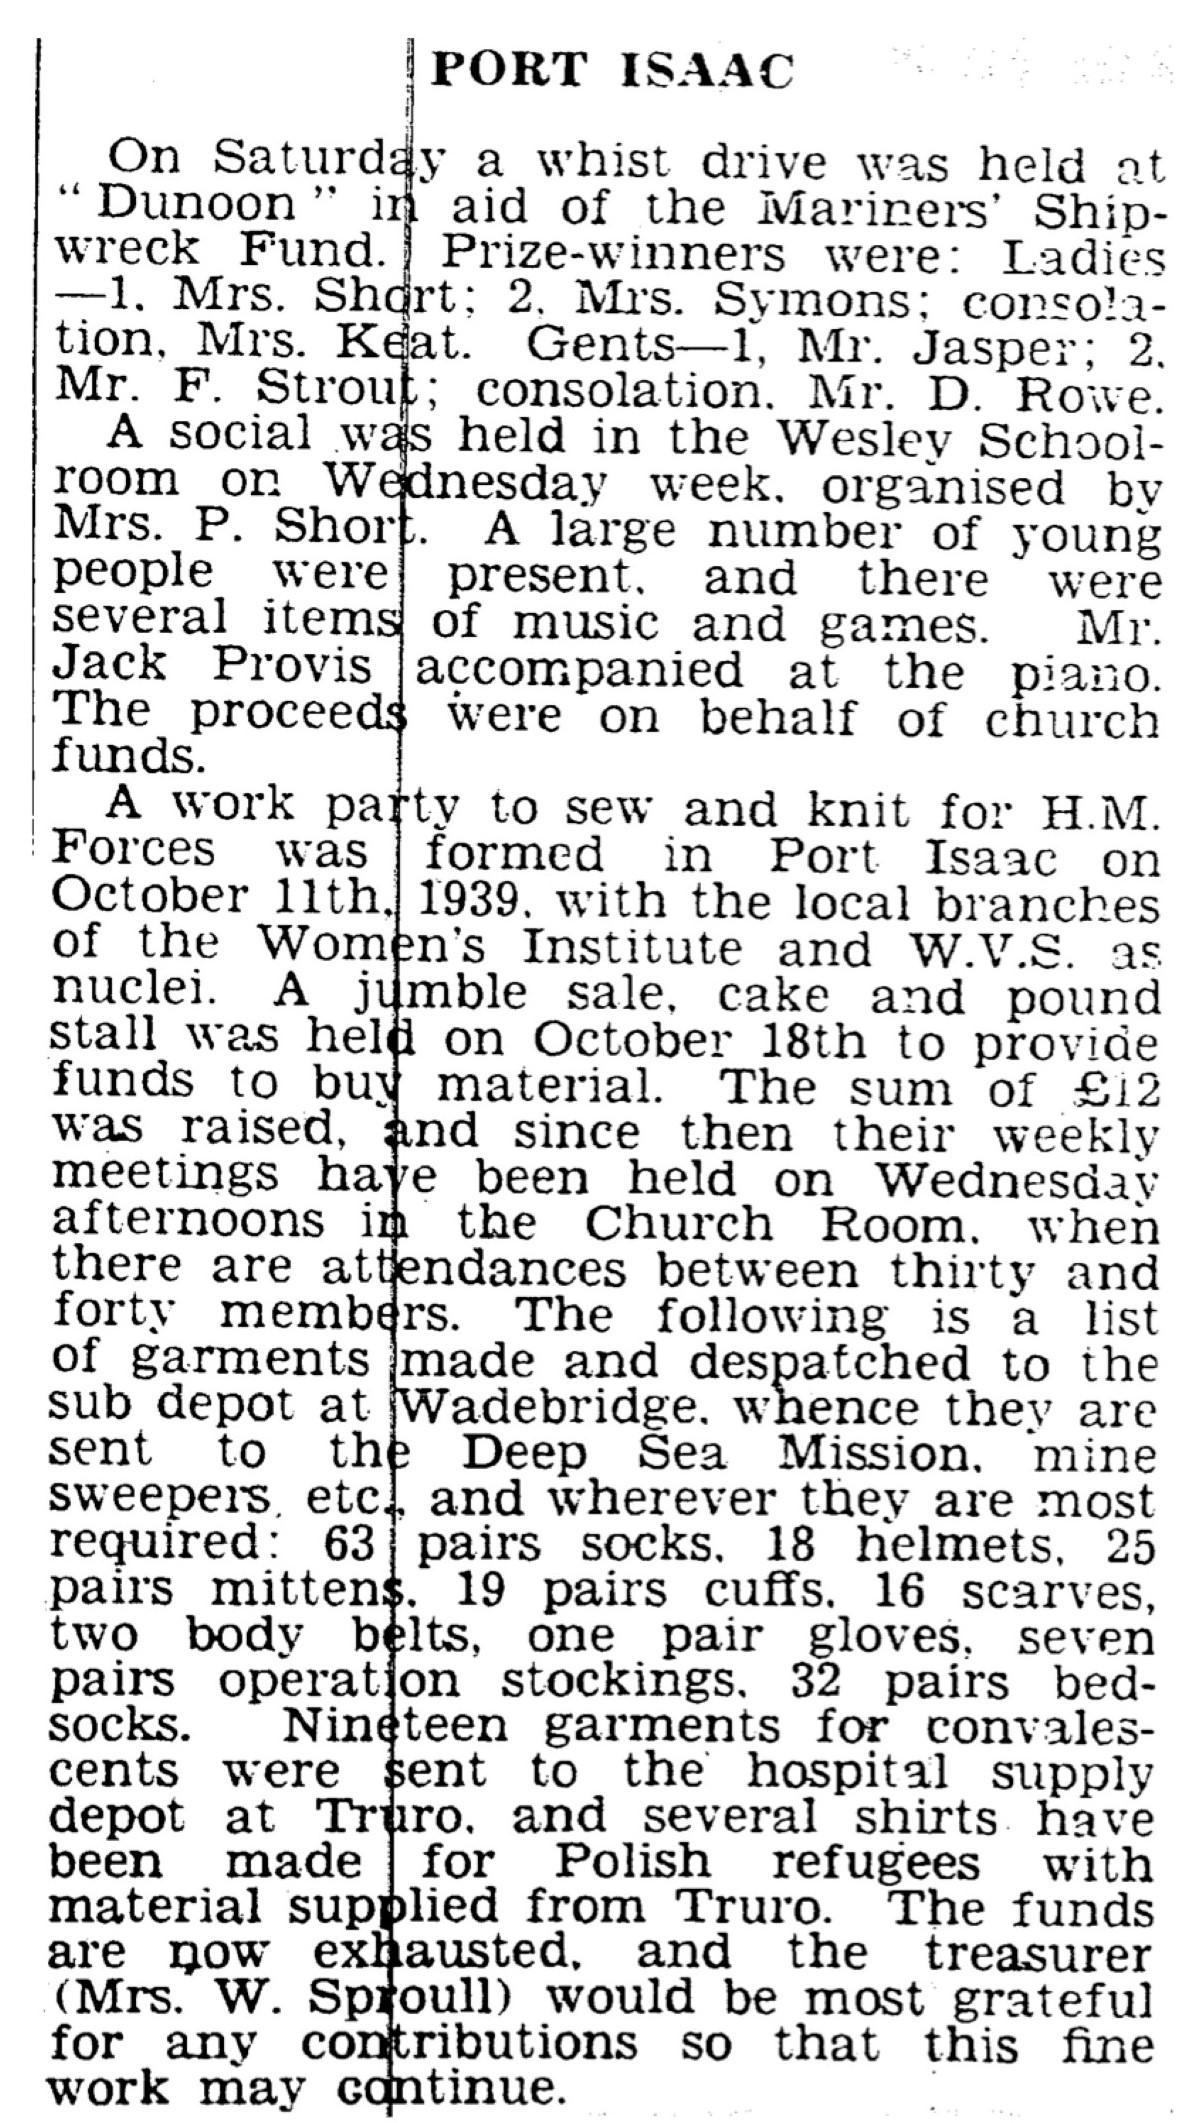 Newspaper cutting, February 15th 1940